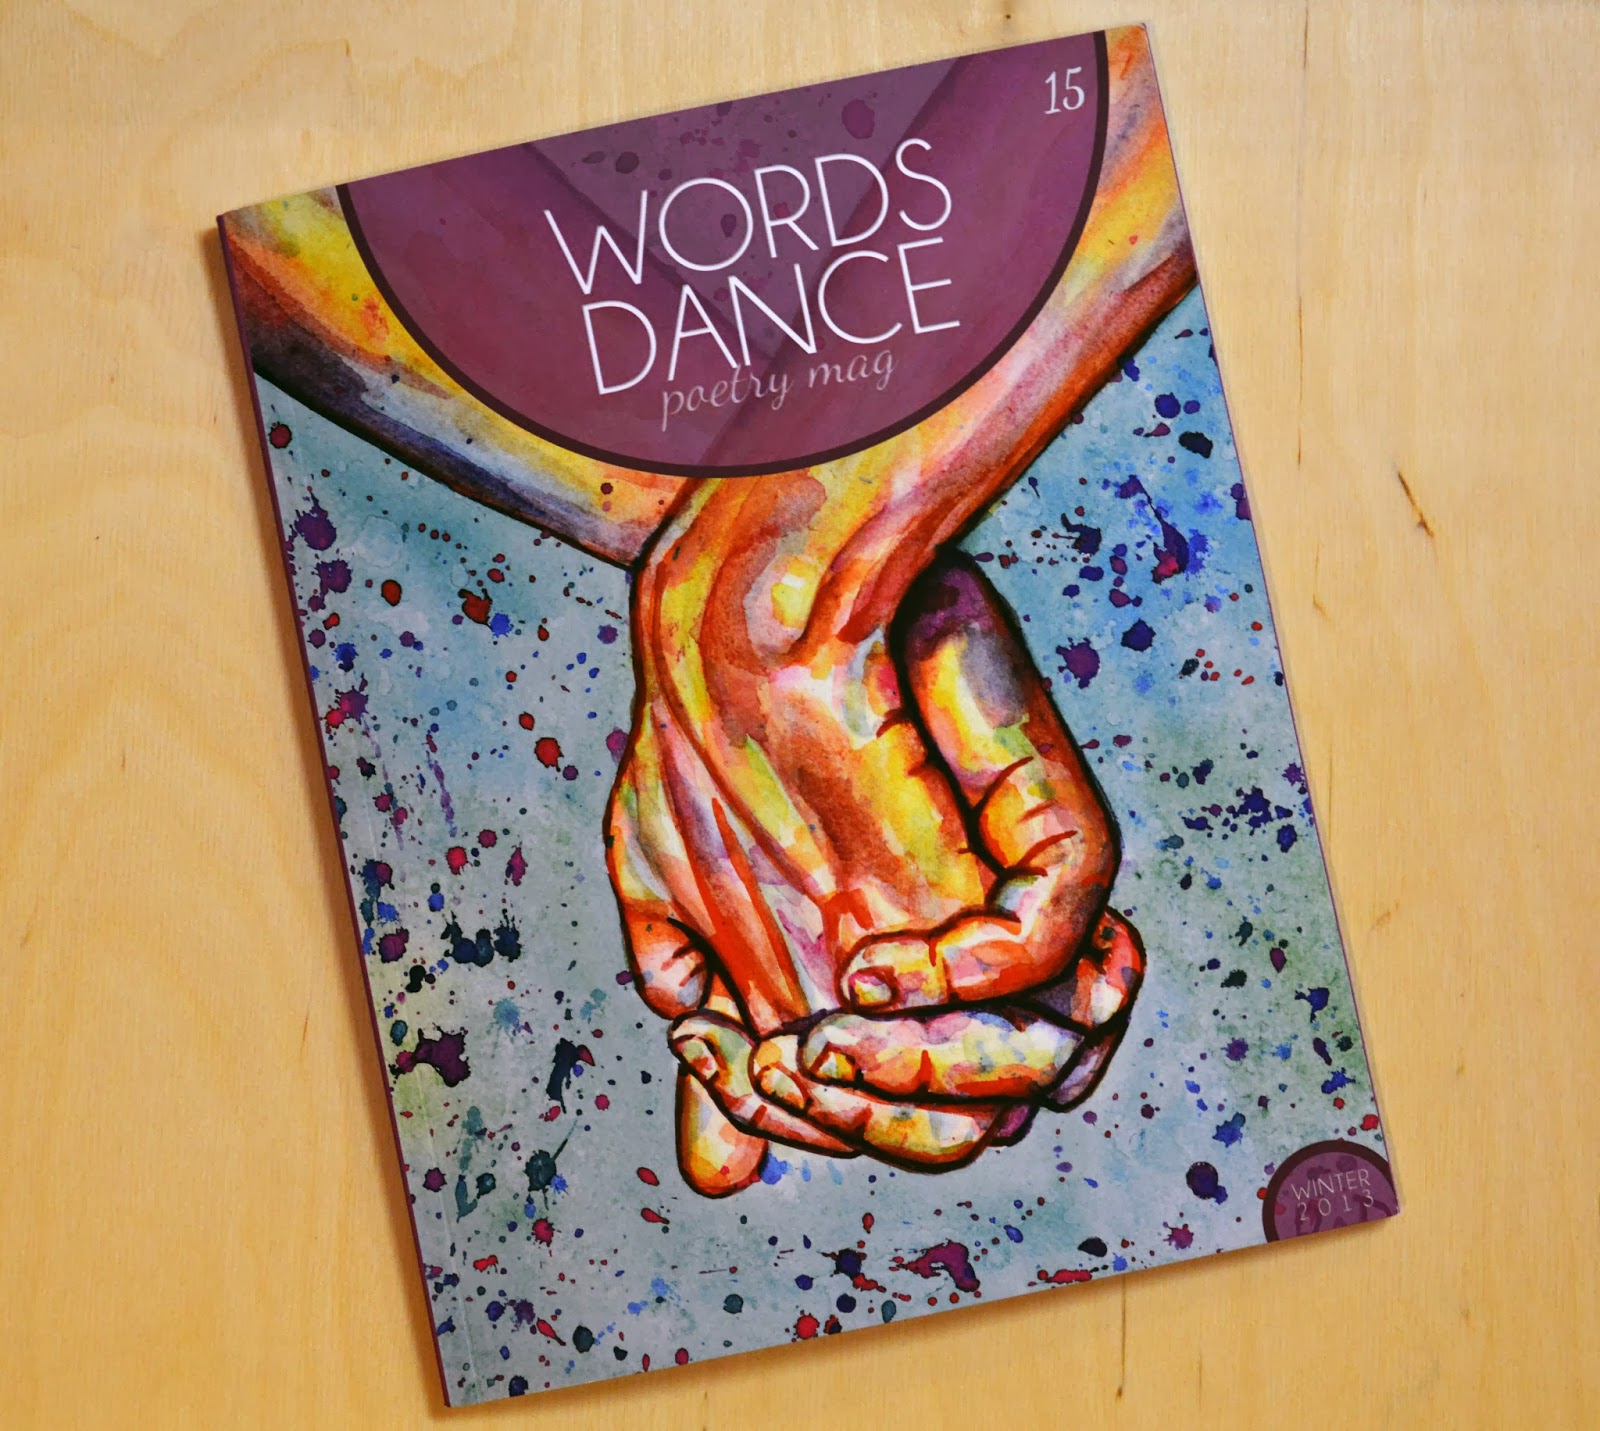 http://wordsdance.com/words-dance-issue-15/